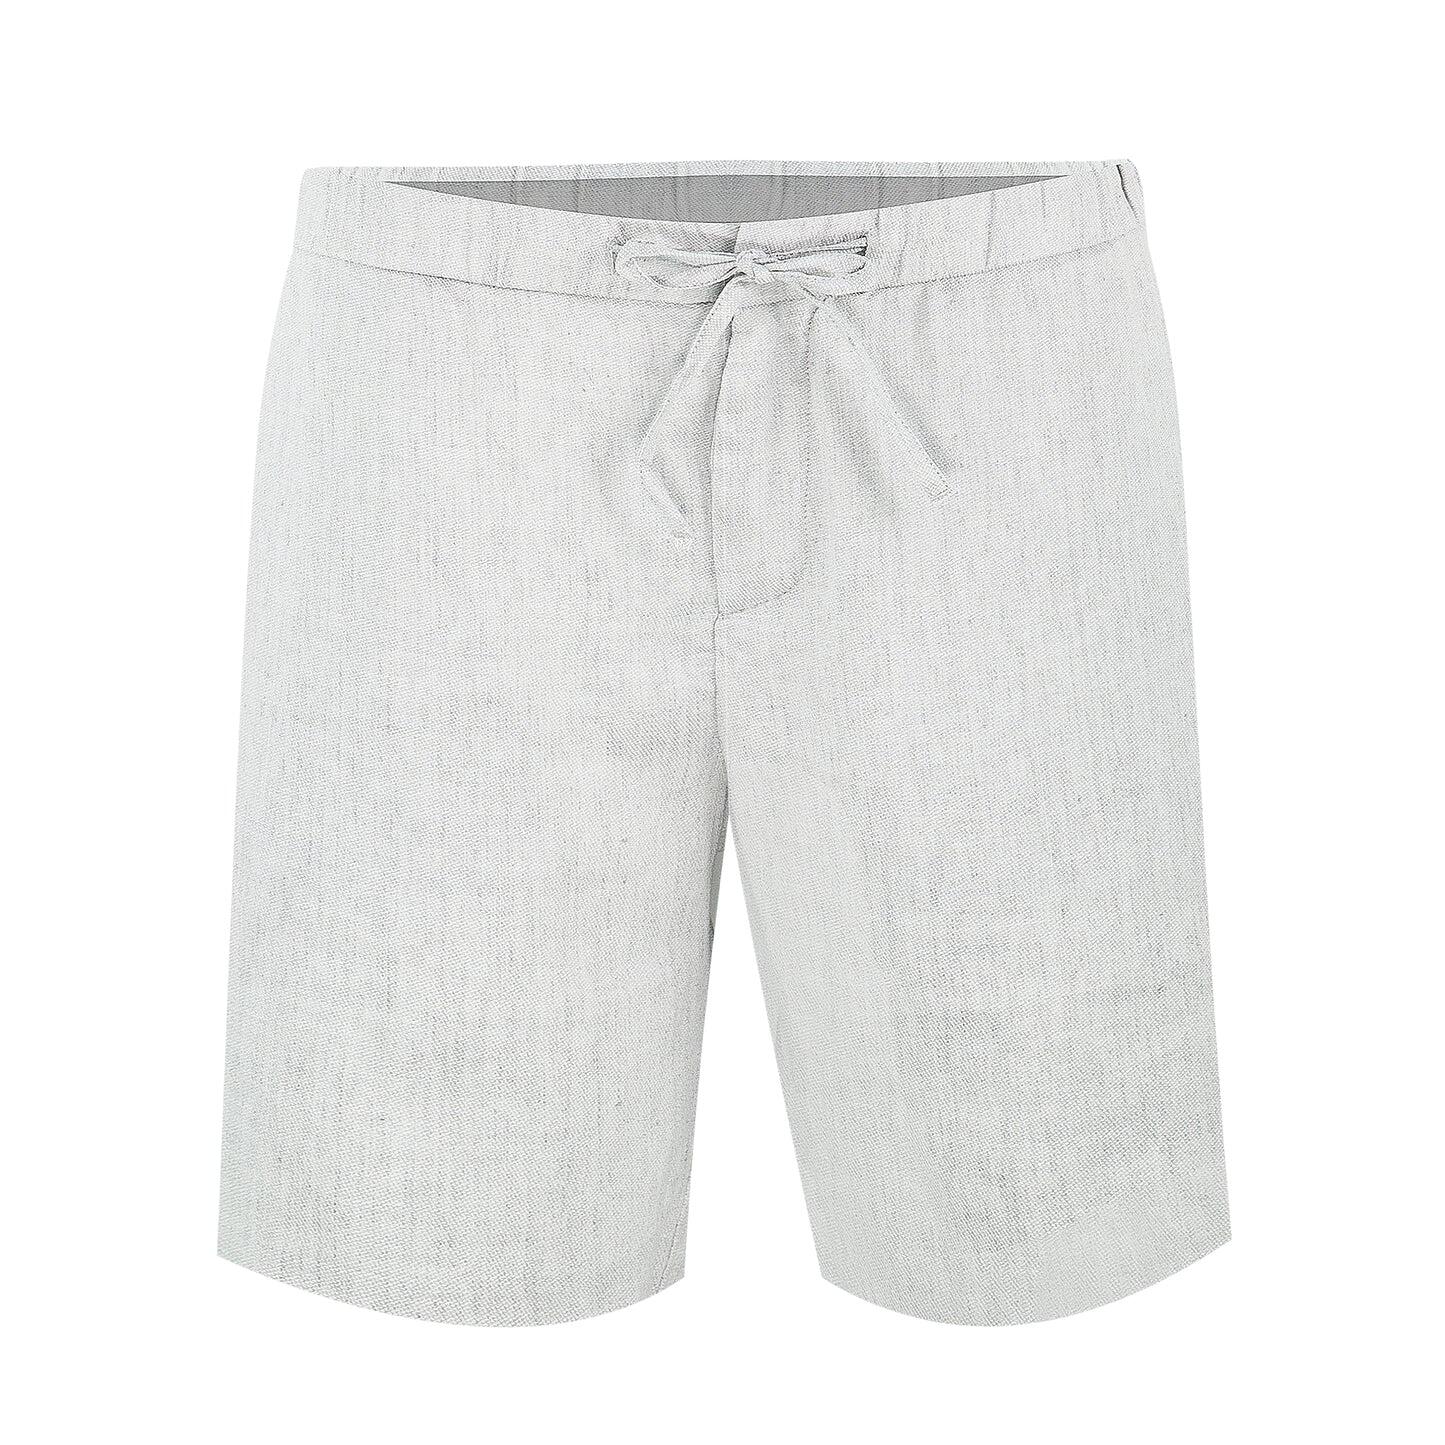 Grey Linen Shorts for Men